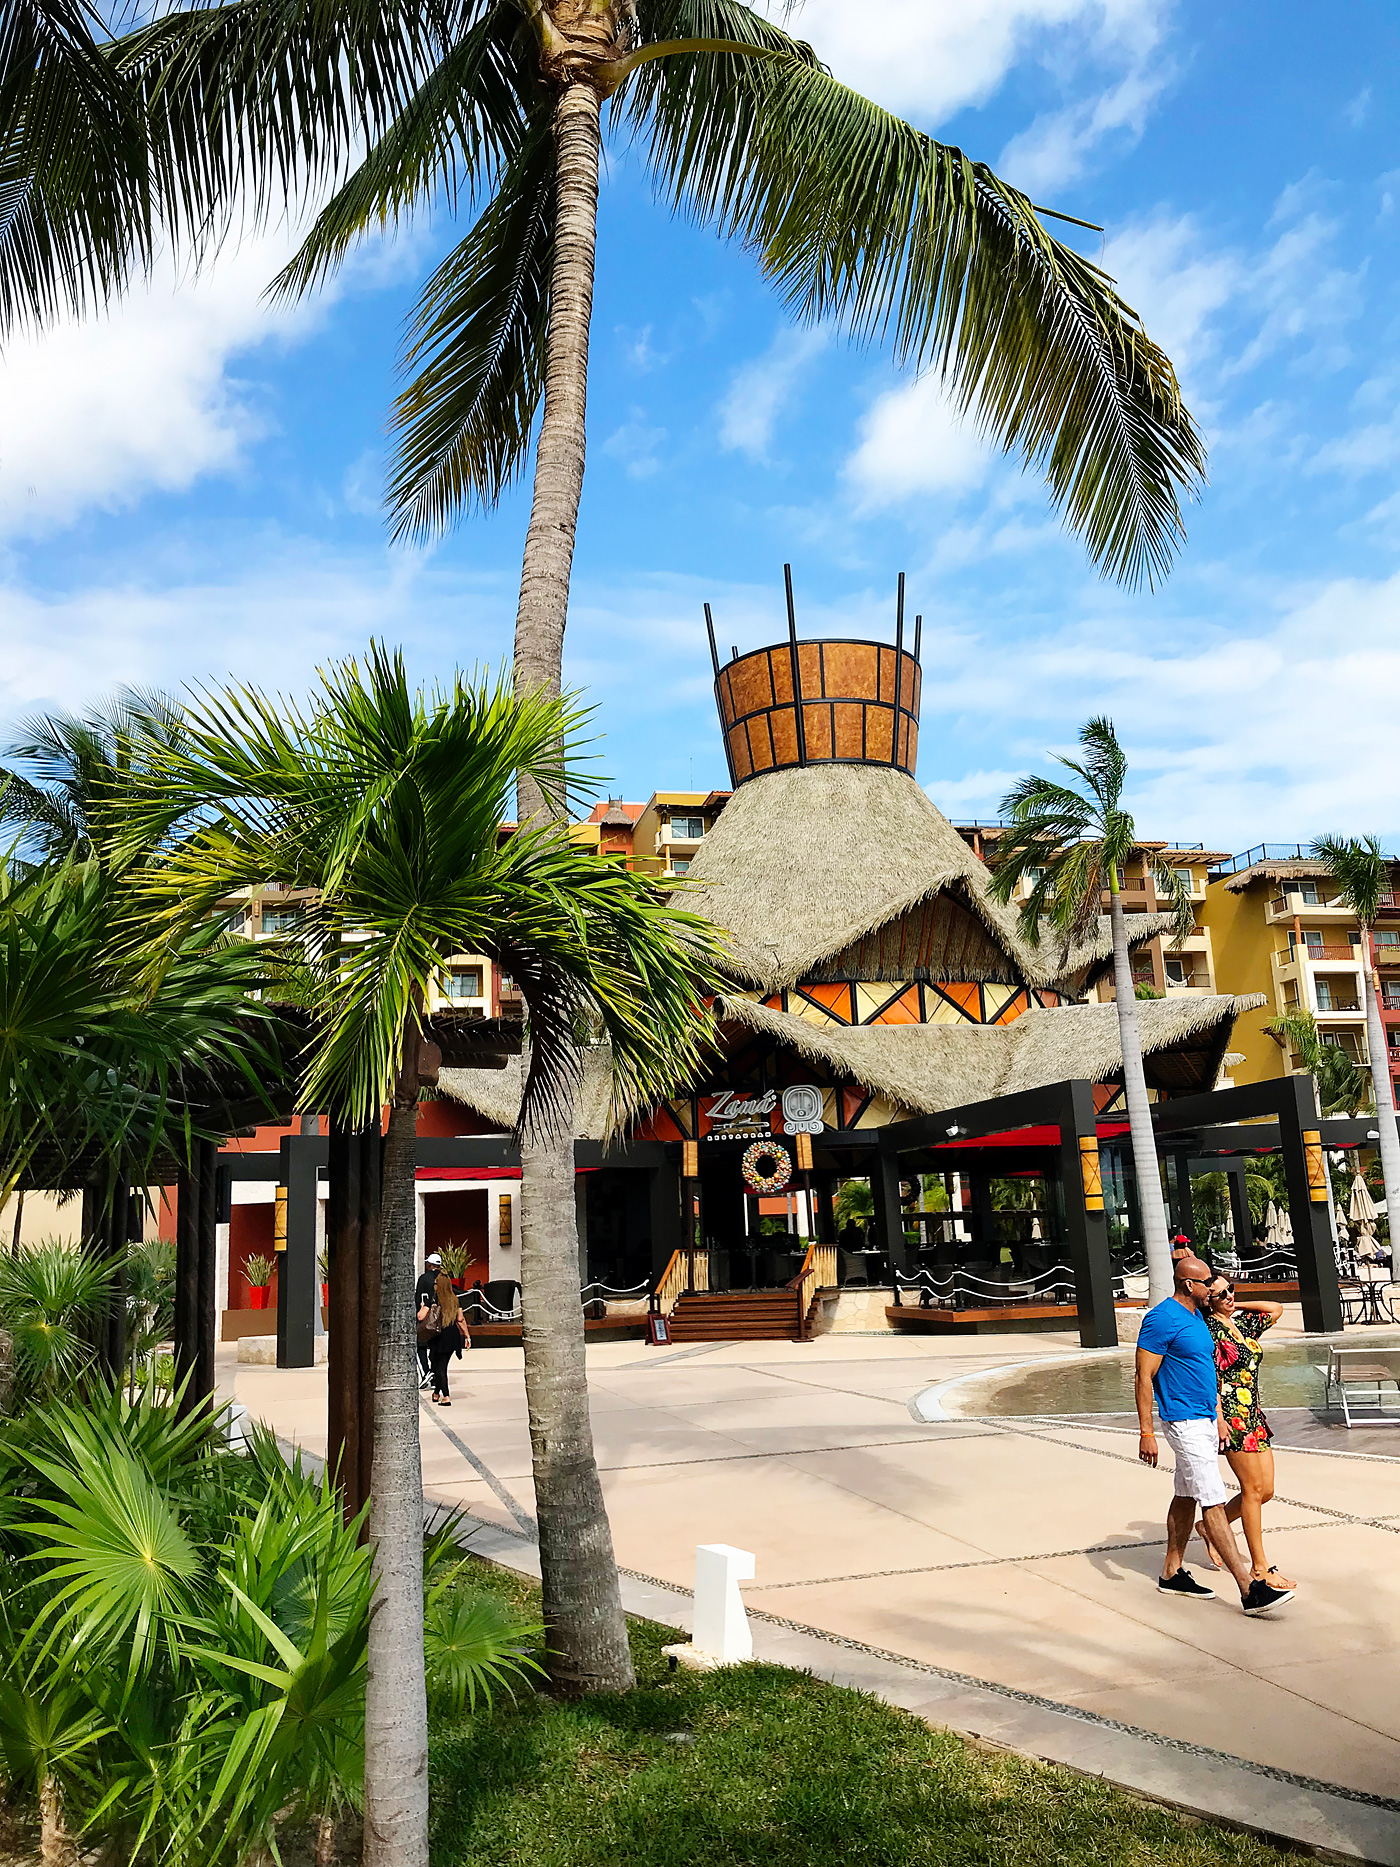 Villa Del Palmar - Cancun Luxury Travel - Resort Review